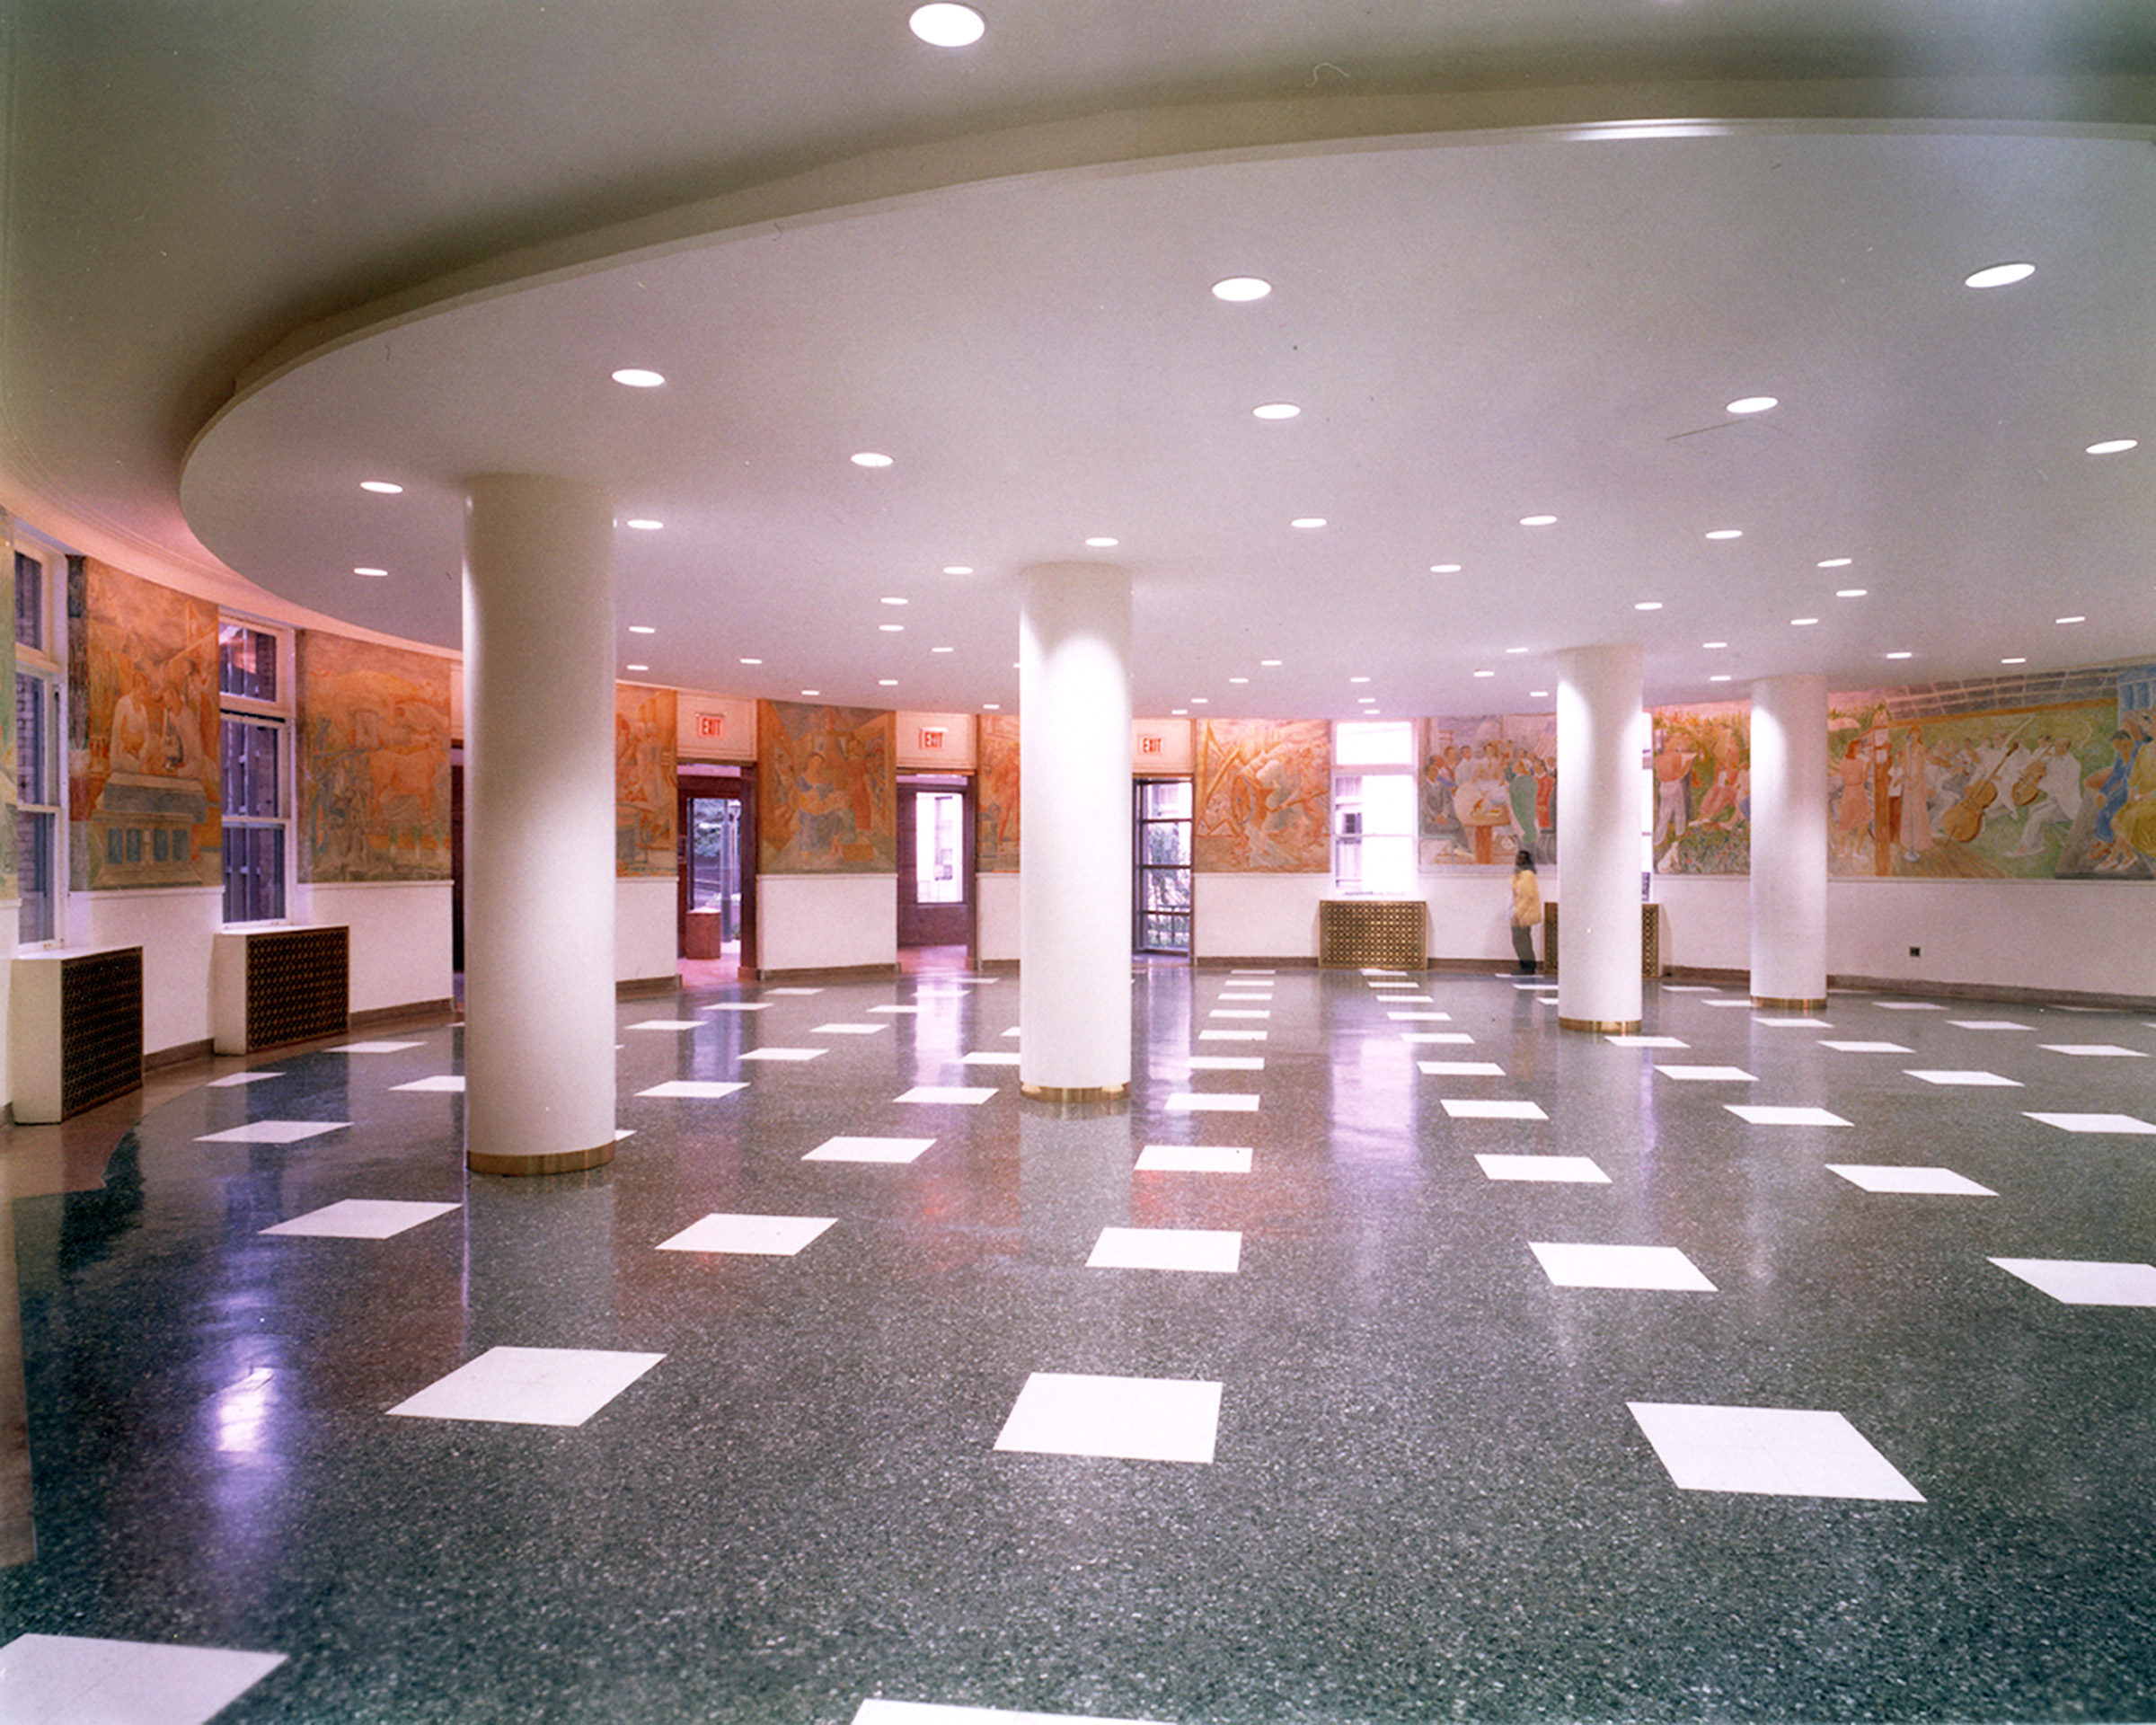 BH - New Entrance Lobby - Interior View 1.jpg